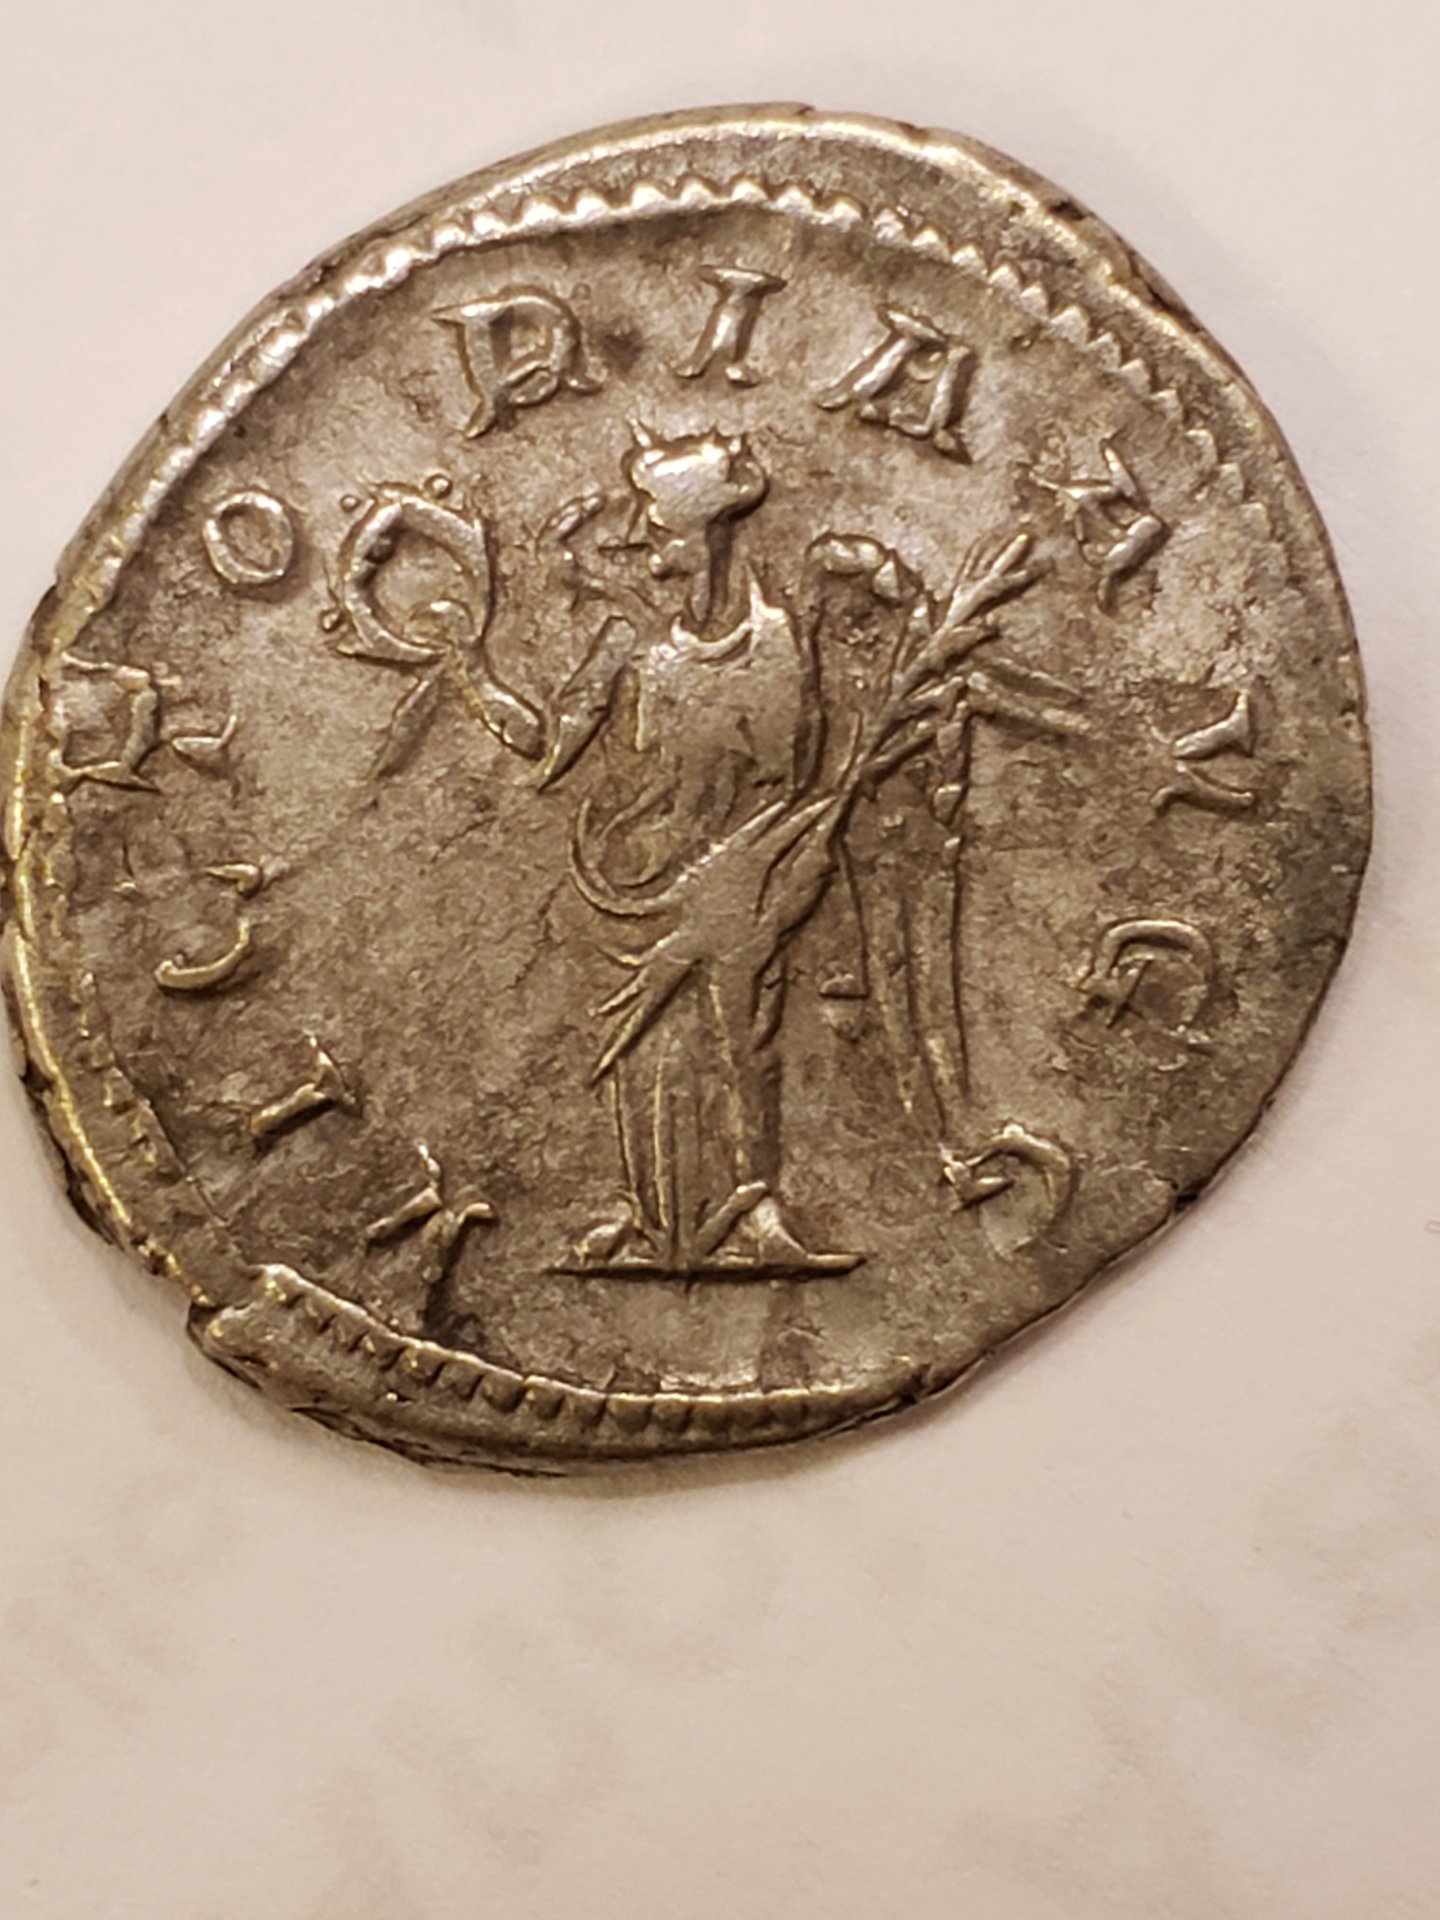 Philip 1 | Coin Talk